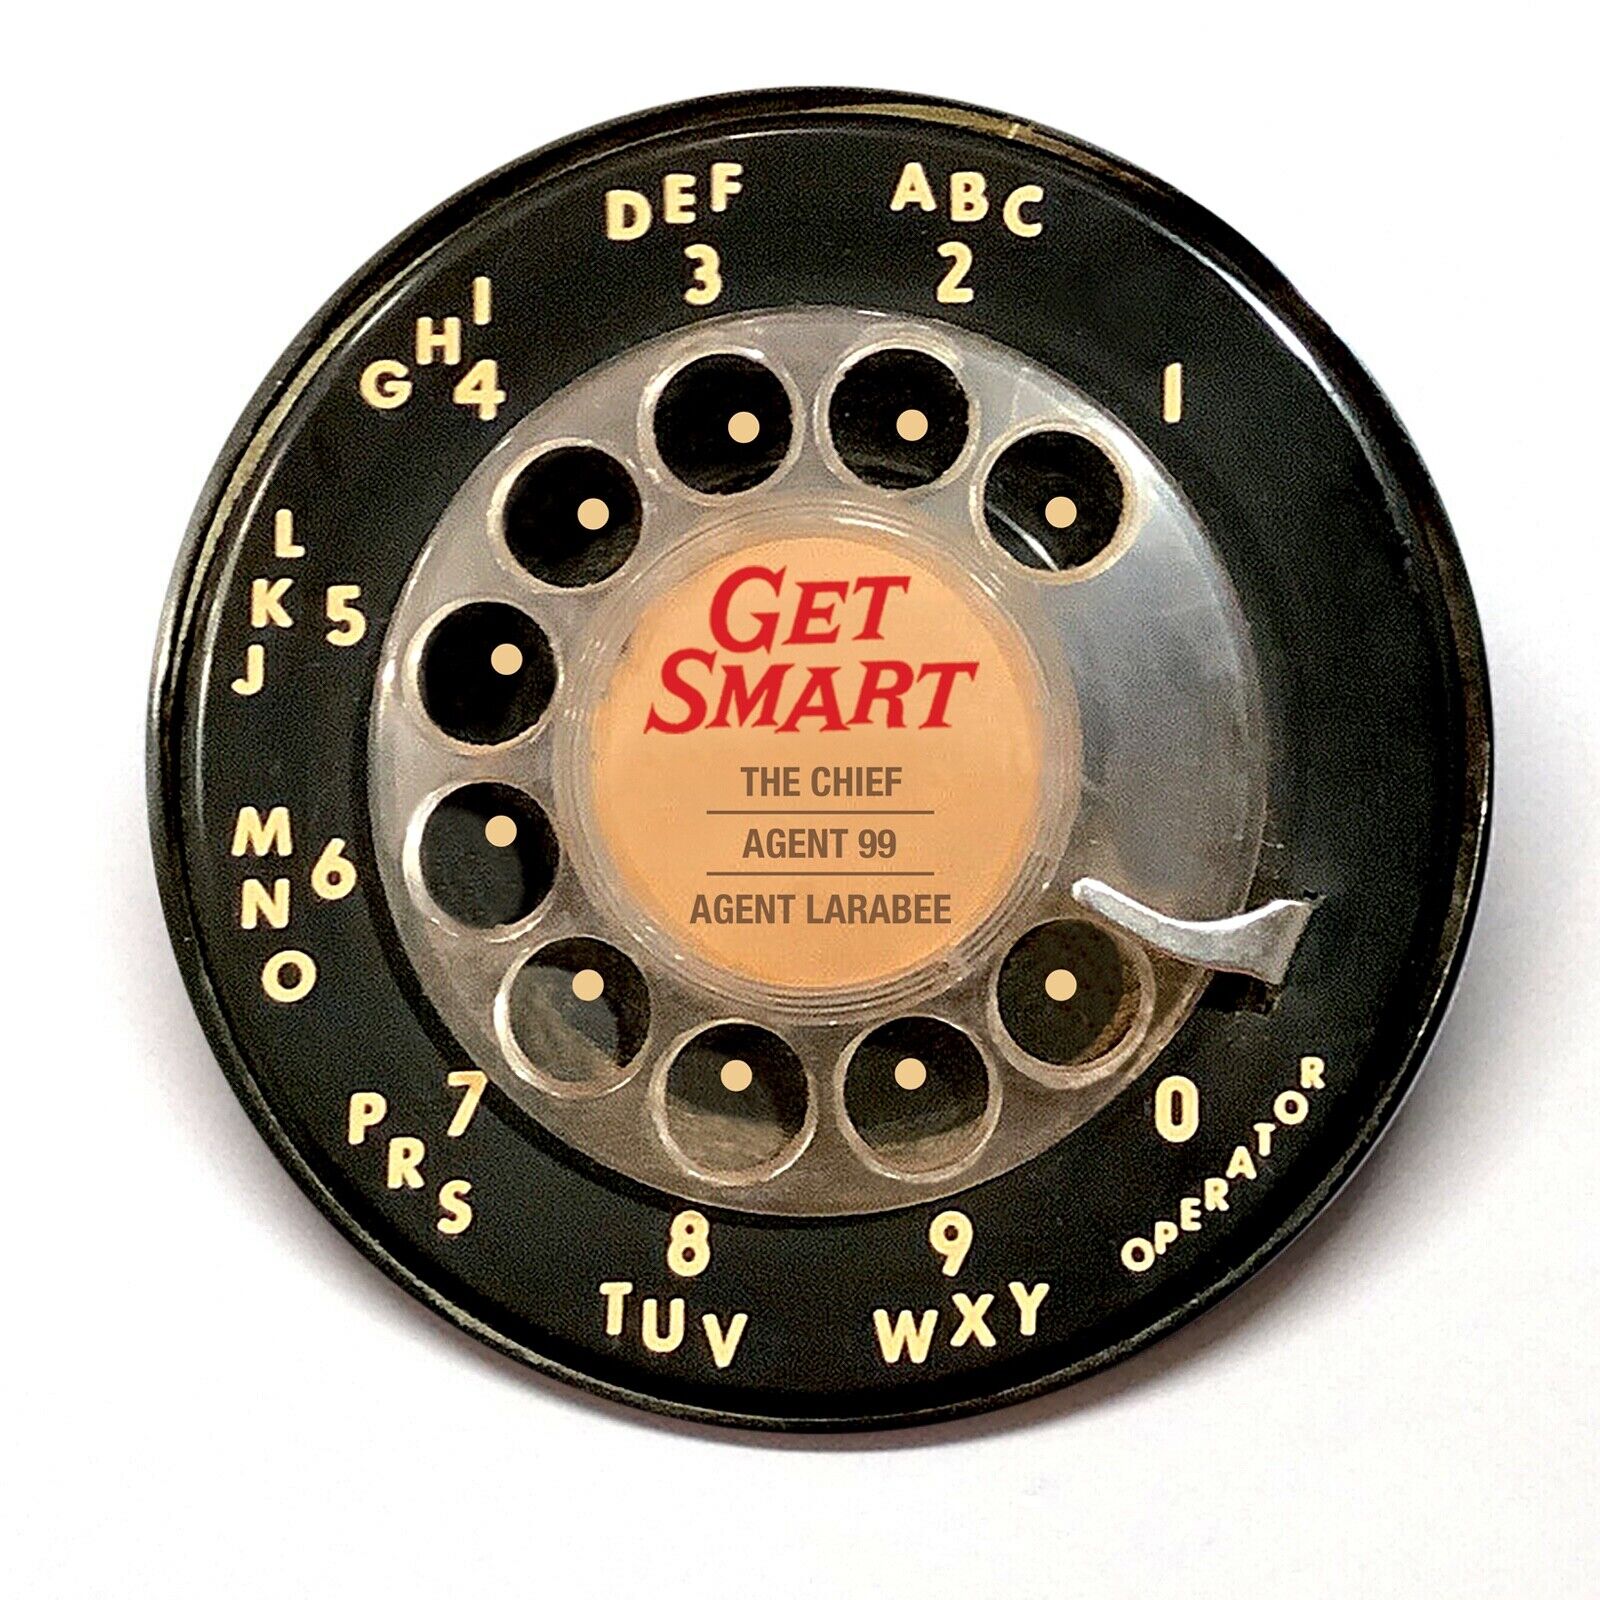 Get Smart Shoe Phone Dial Advertising Pocket Mirror Retro Style